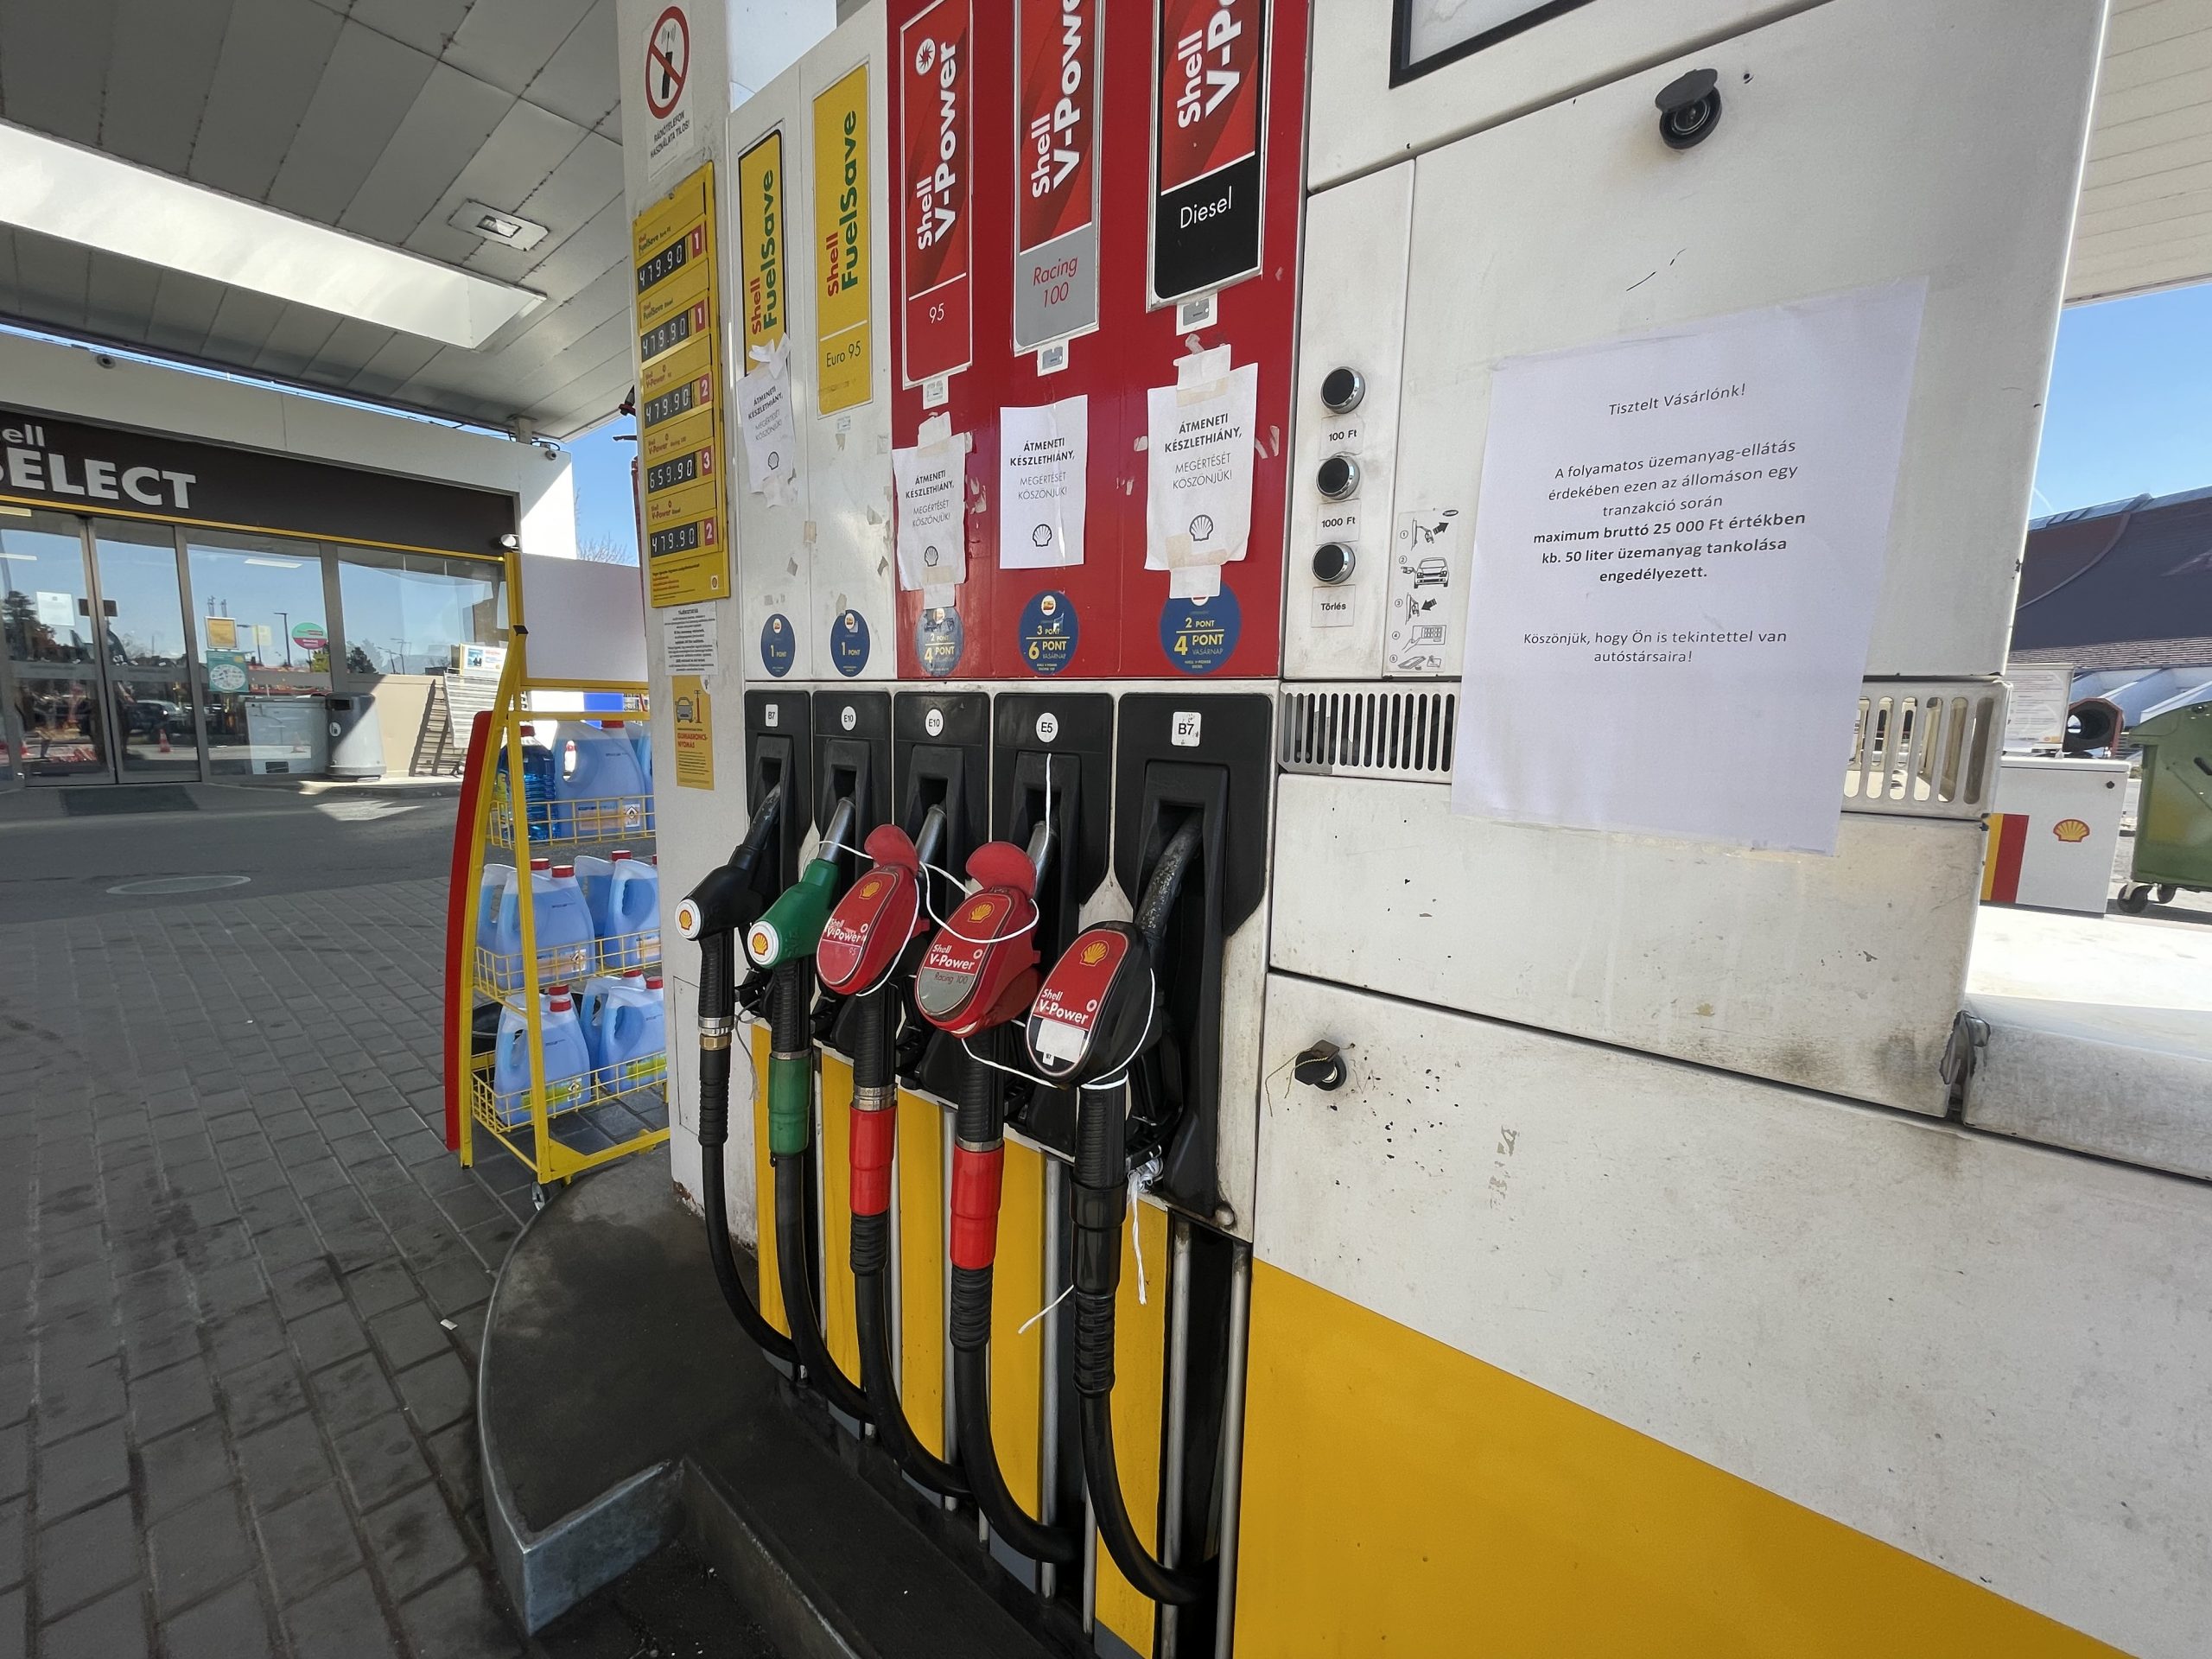 Gasoline tourism boosts fuel sales